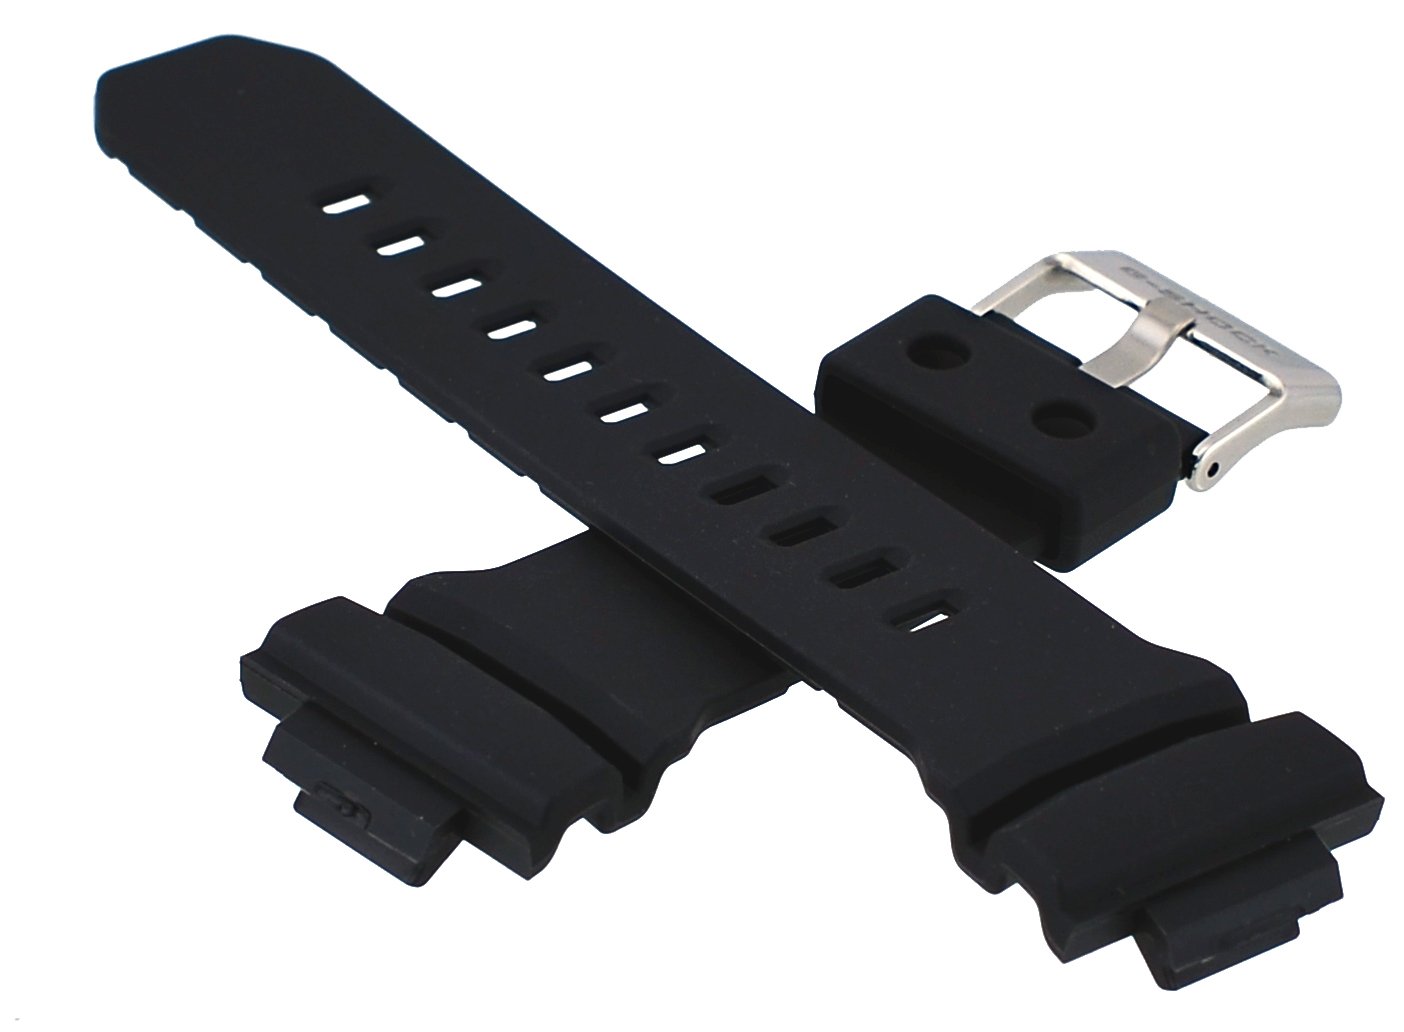 Casio Genuine Replacement Strap Band for G Shock Watch Model # Ga200-1 Ga-200-1